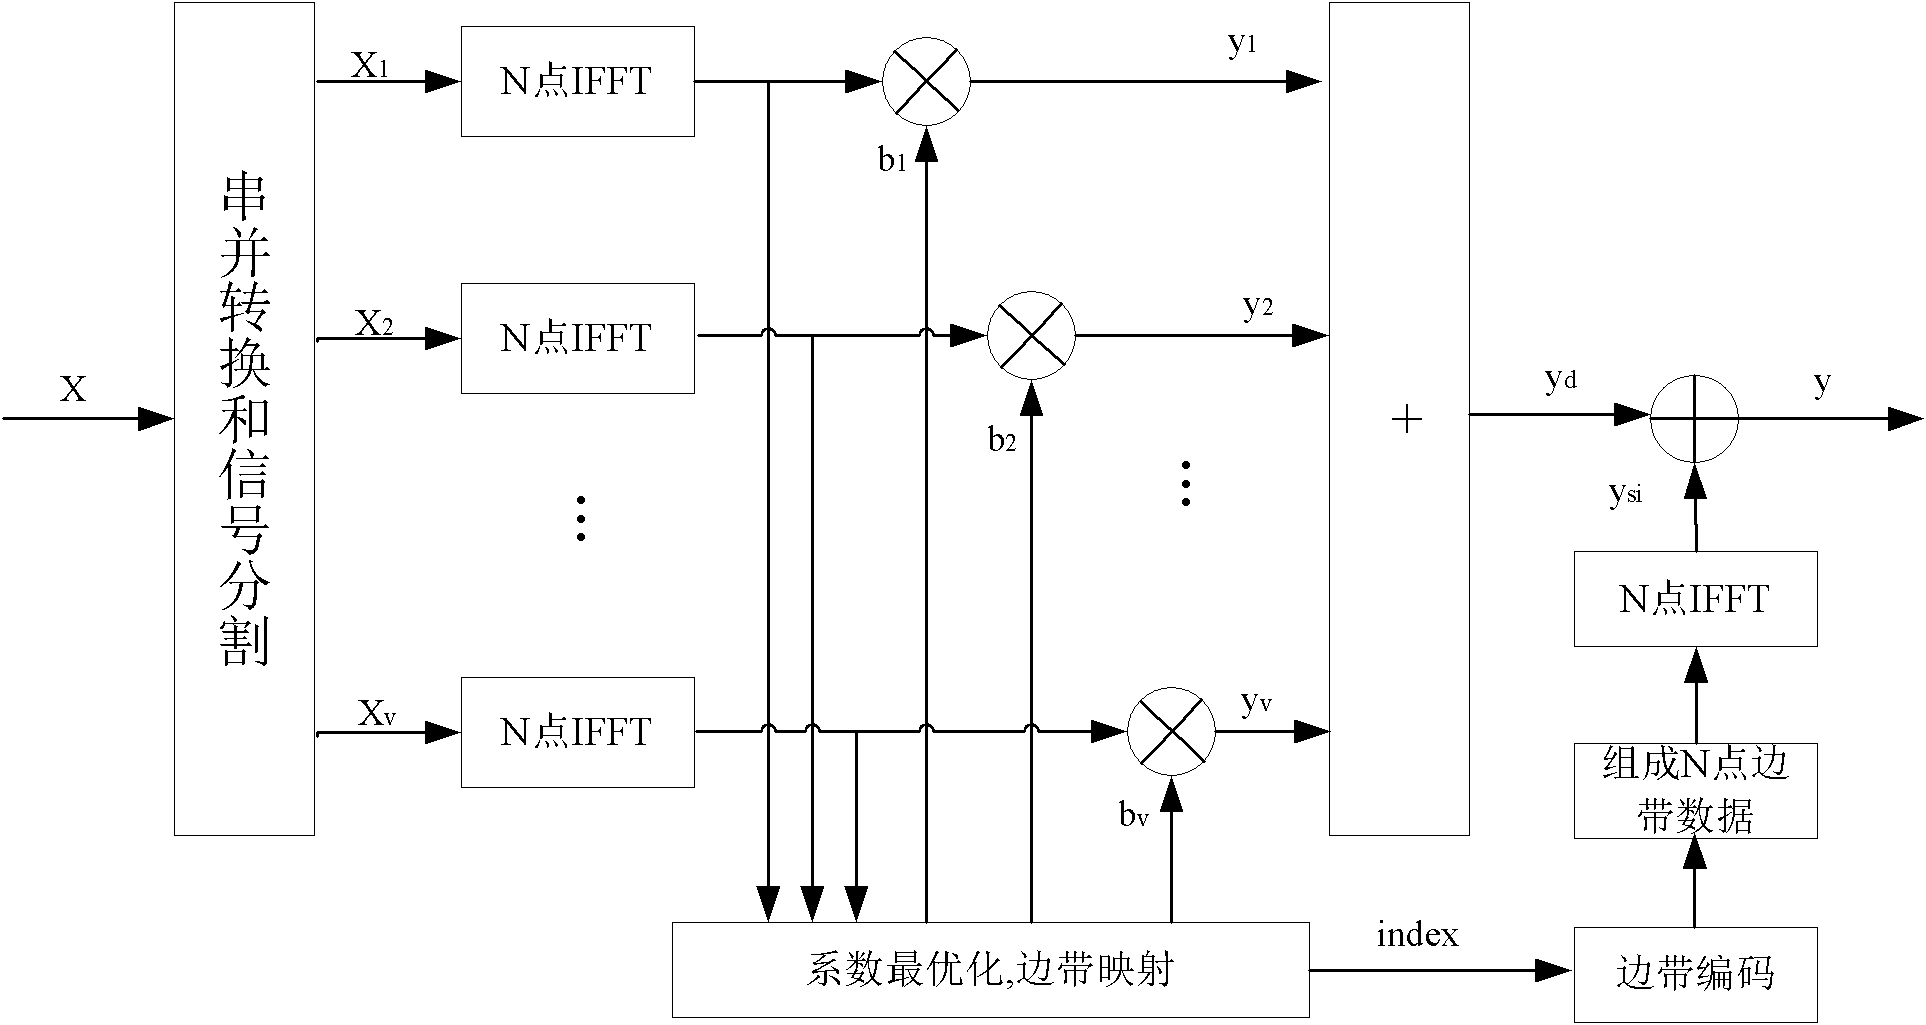 Method for reducing peak to average power ratio of OFDM signal